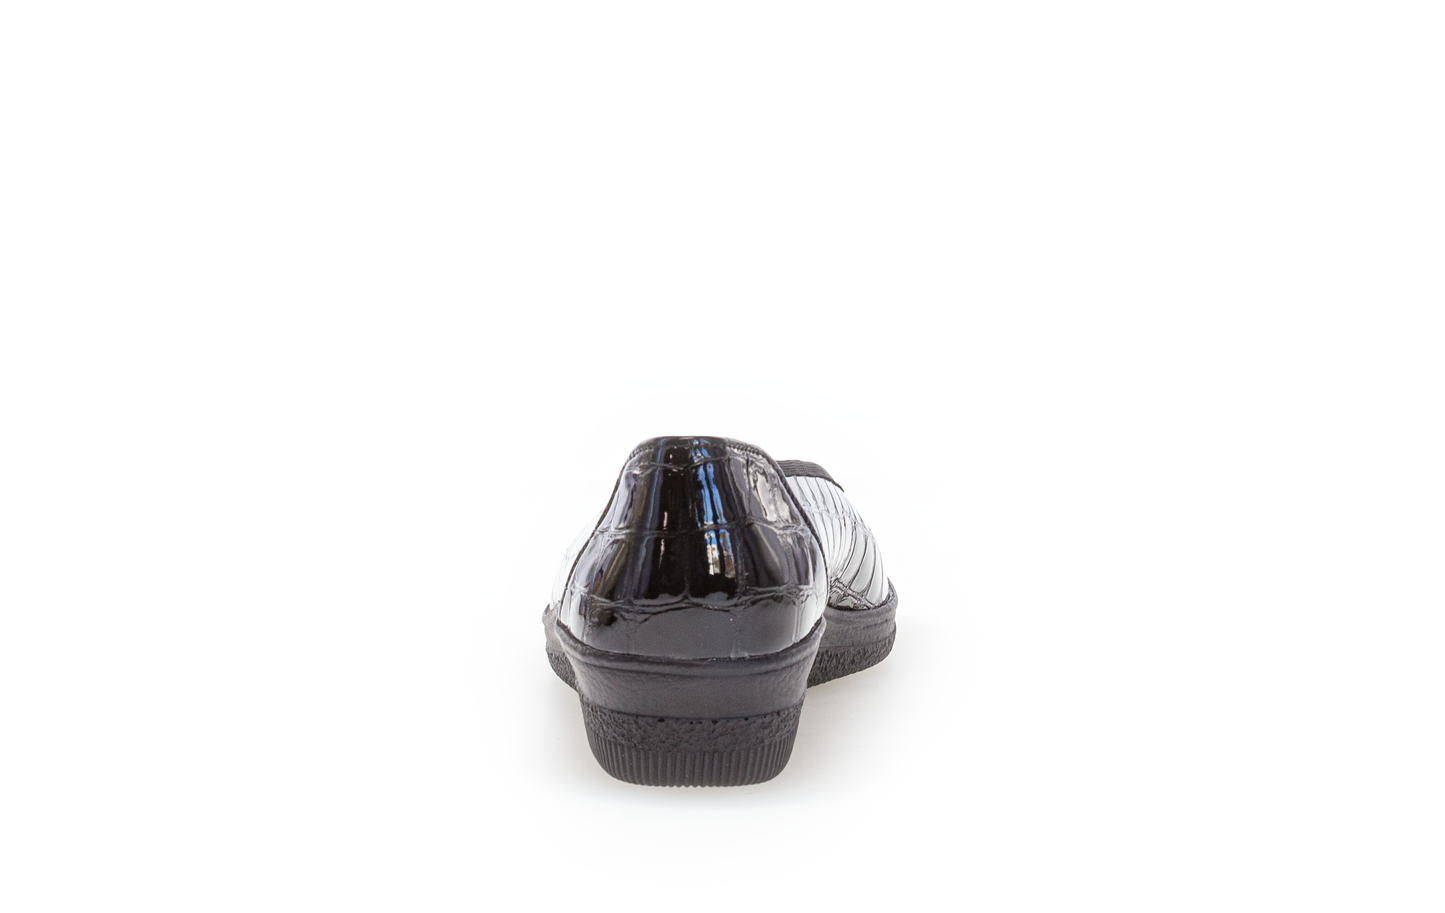 Gabor 06.400.97 Comfort Black Croc Slip On Pumps